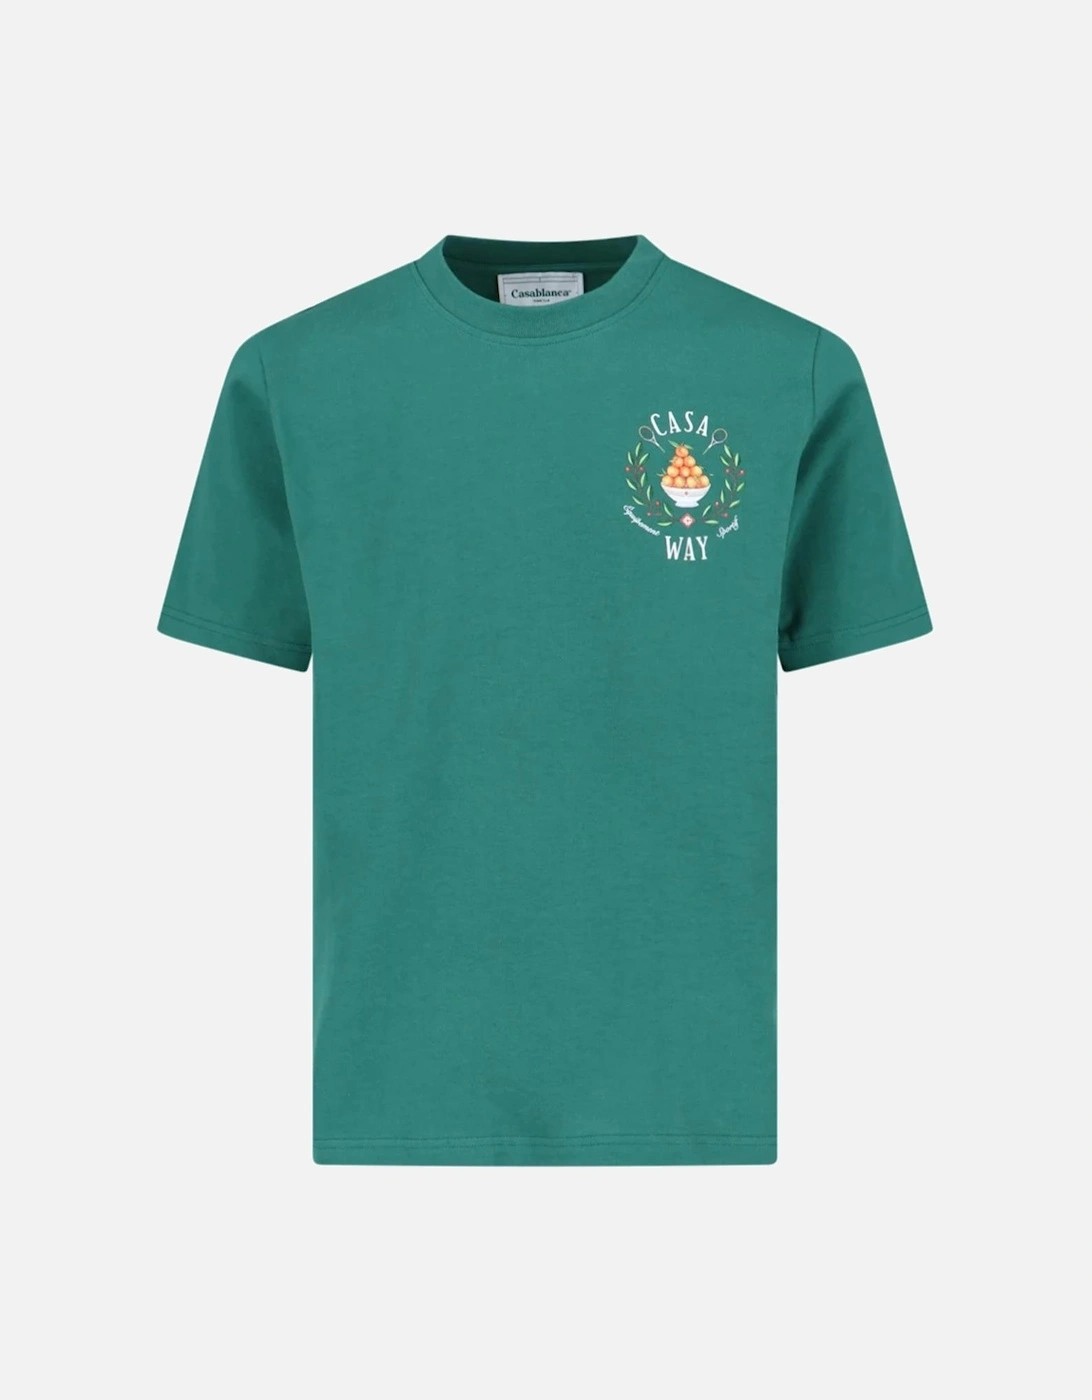 Casa Way Bowl of Oranges Printed T-Shirt in Green, 4 of 3